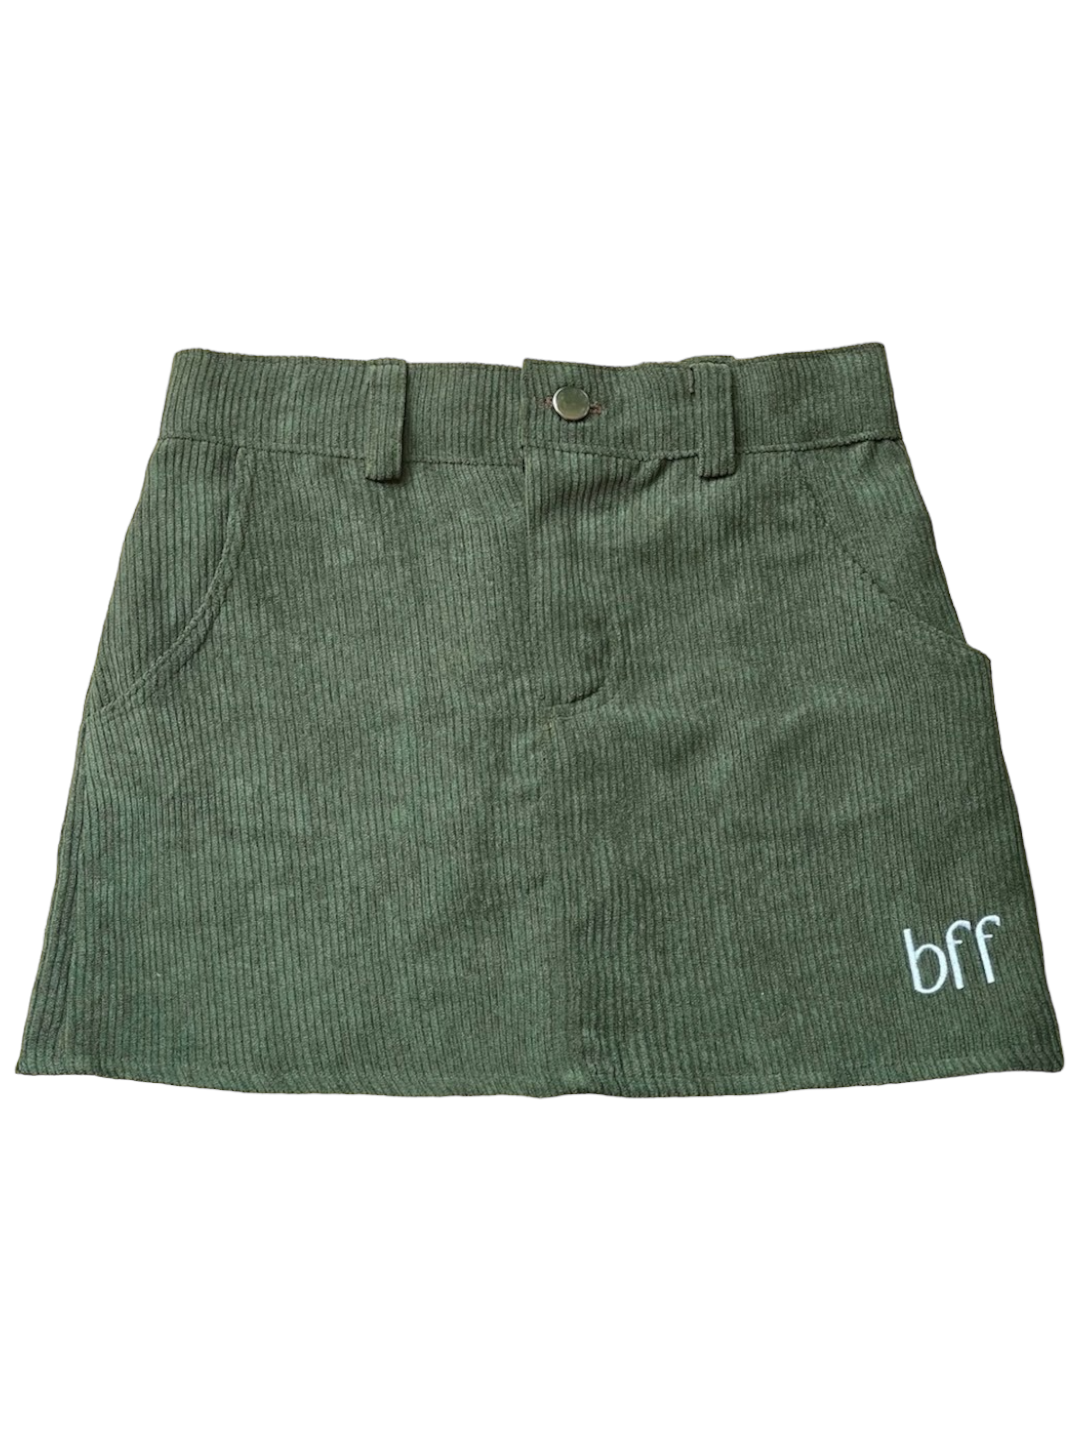 Corduroy Mini Skirt (Olive)